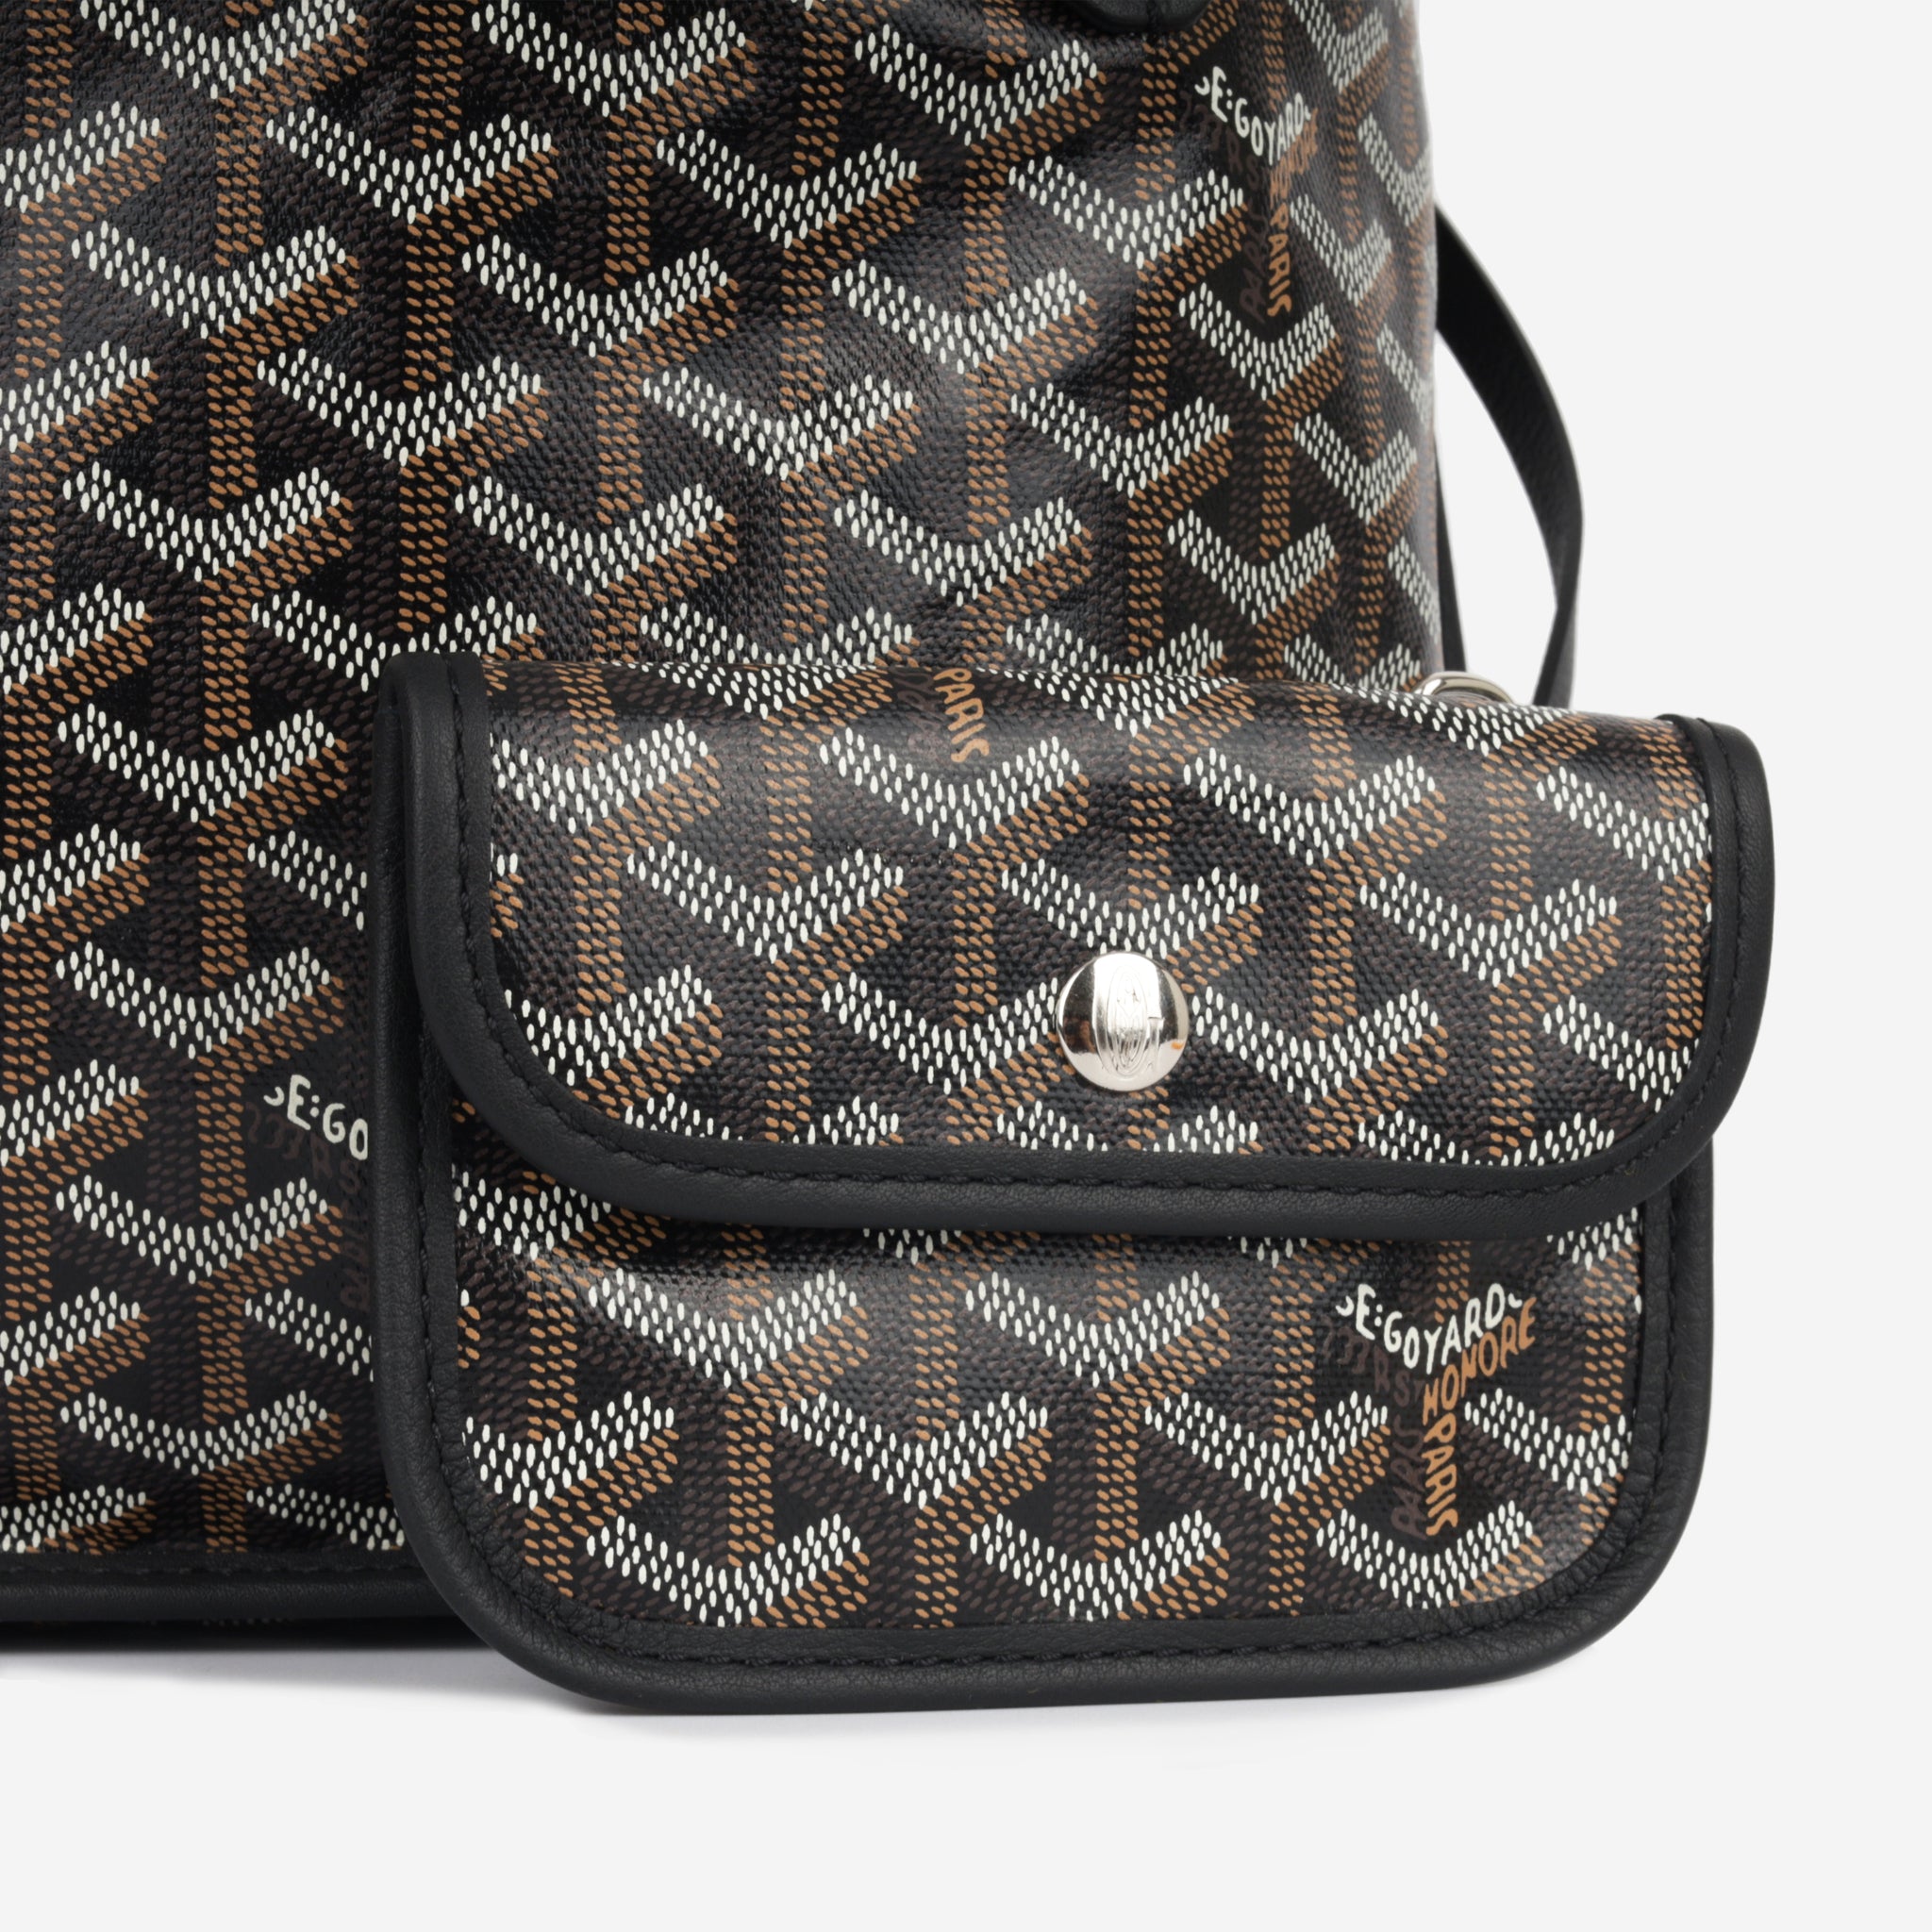 Which way would you wear the Goyard Mini Anjou bag?